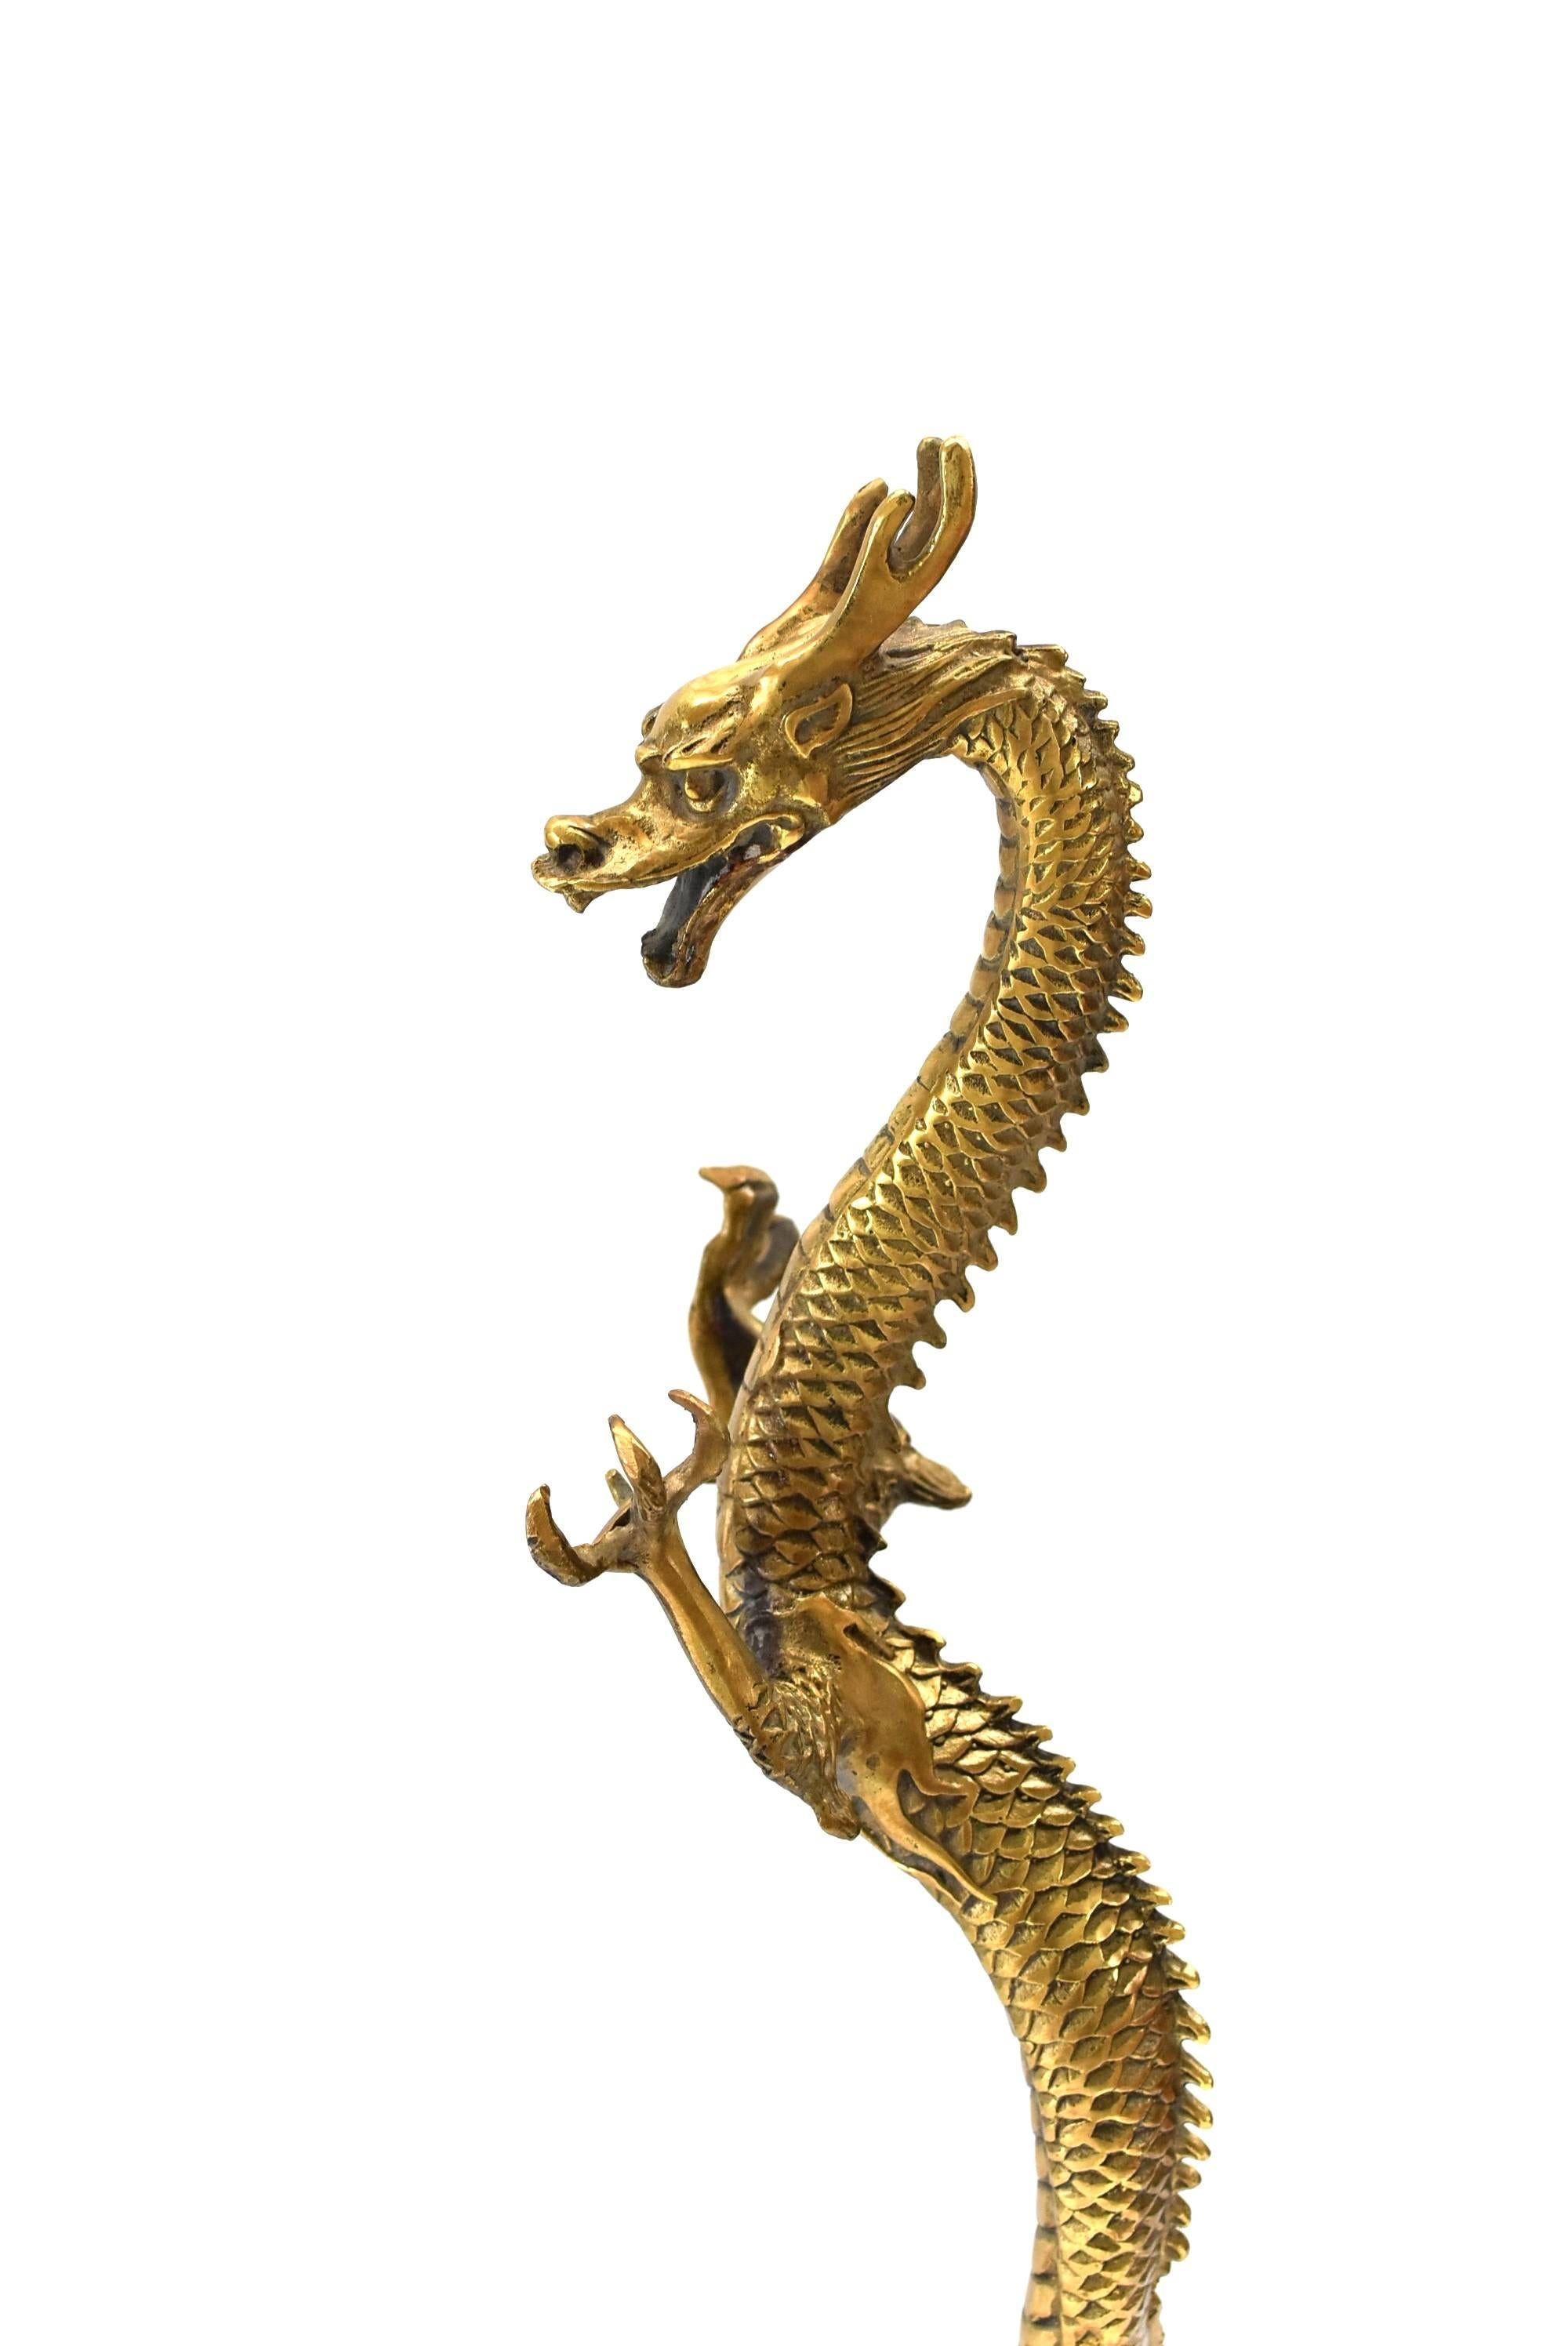 Unique Brass Dragon, Large Standing 8